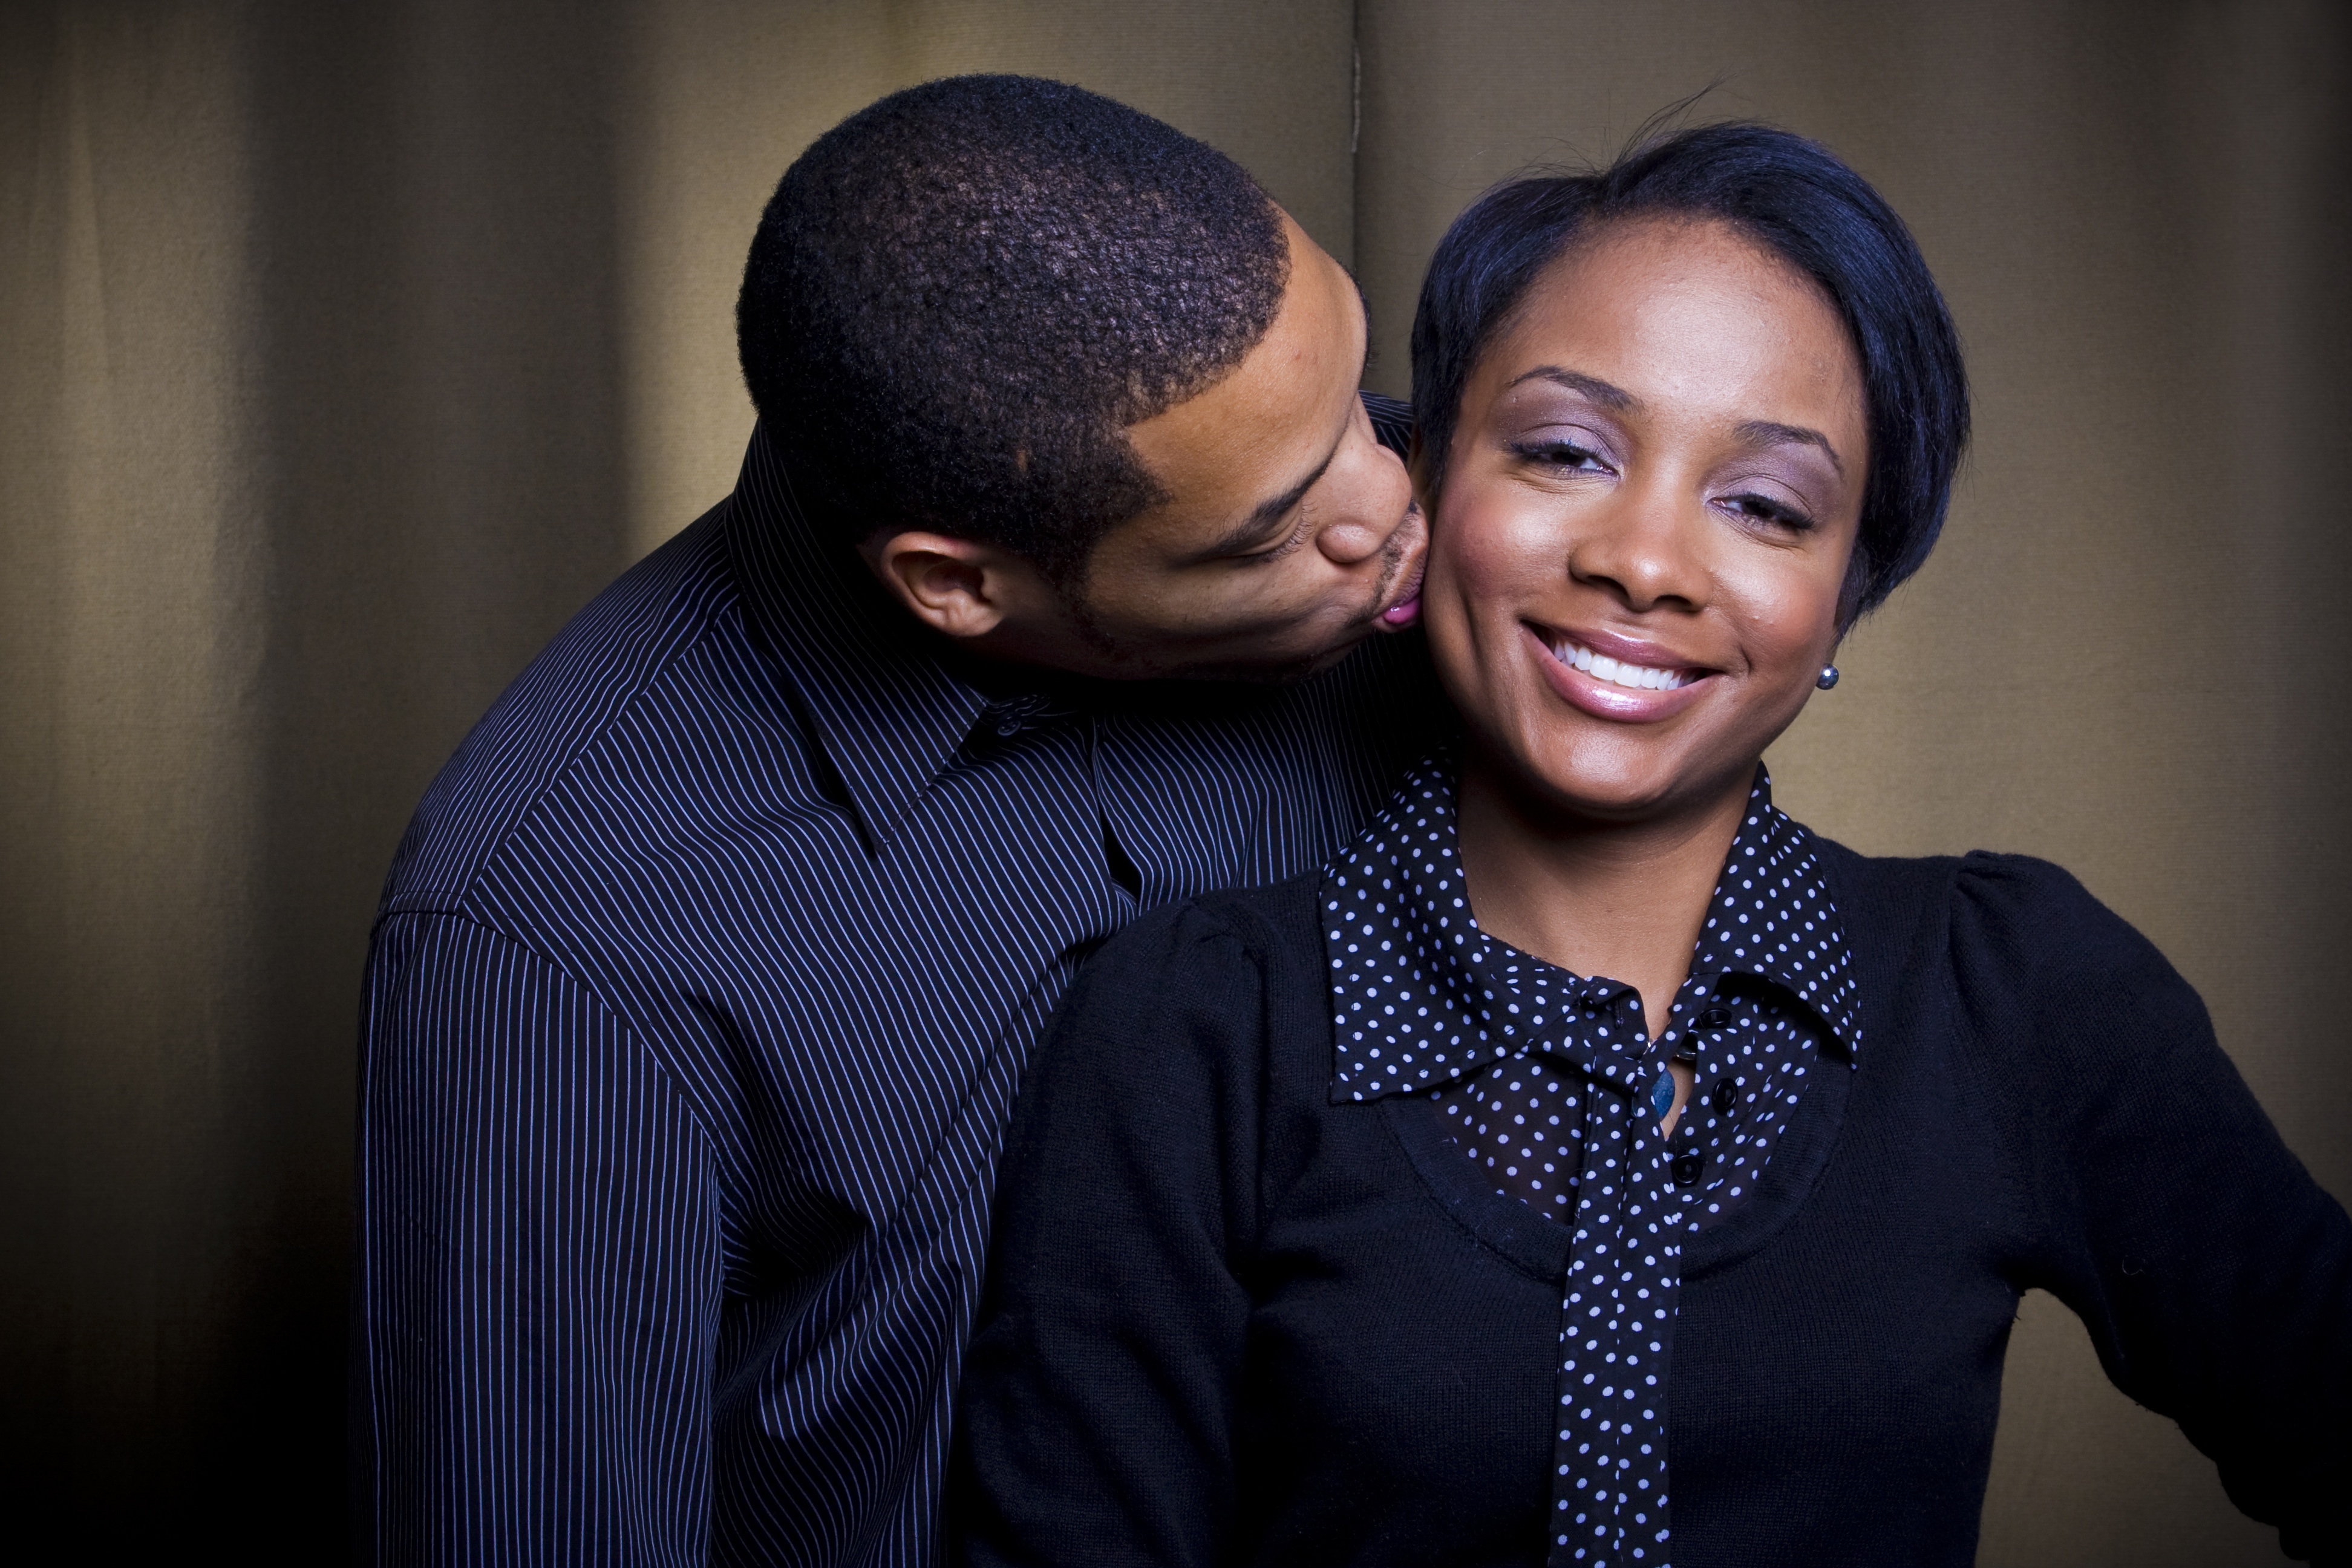 Wife boyfriend. Жены афроамериканцев. Негр целует в щеку. Husband. Black man and Black woman.